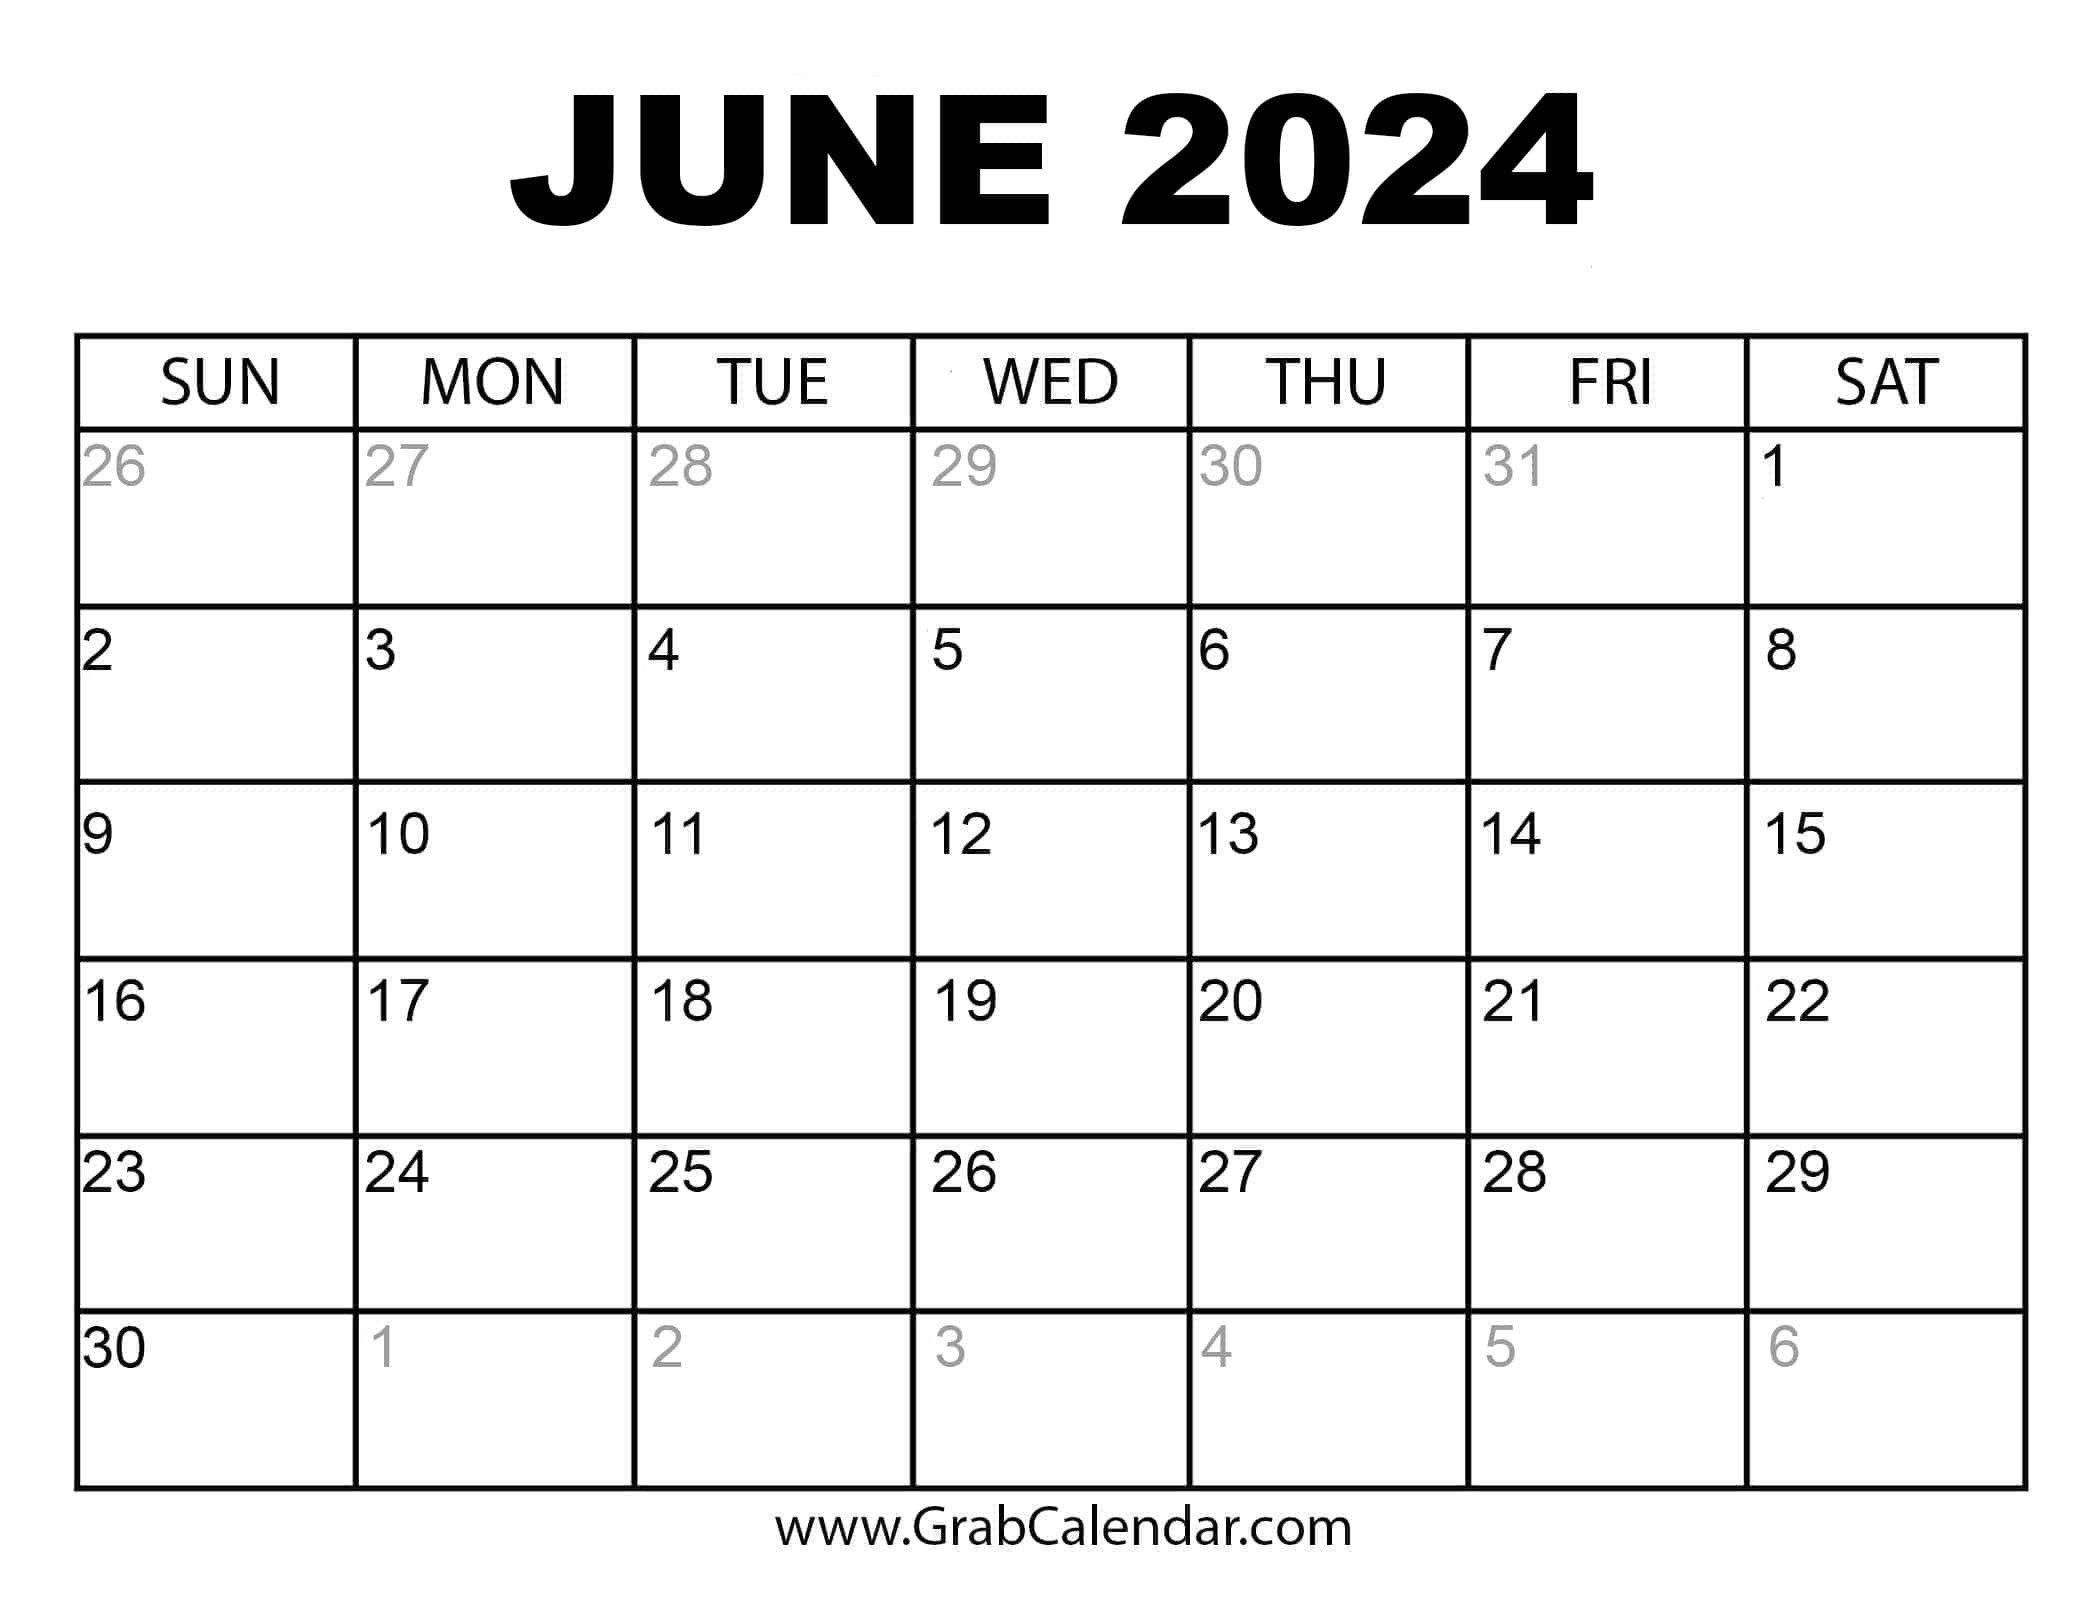 Printable June 2024 Calendar intended for Calendar To Print June 2024